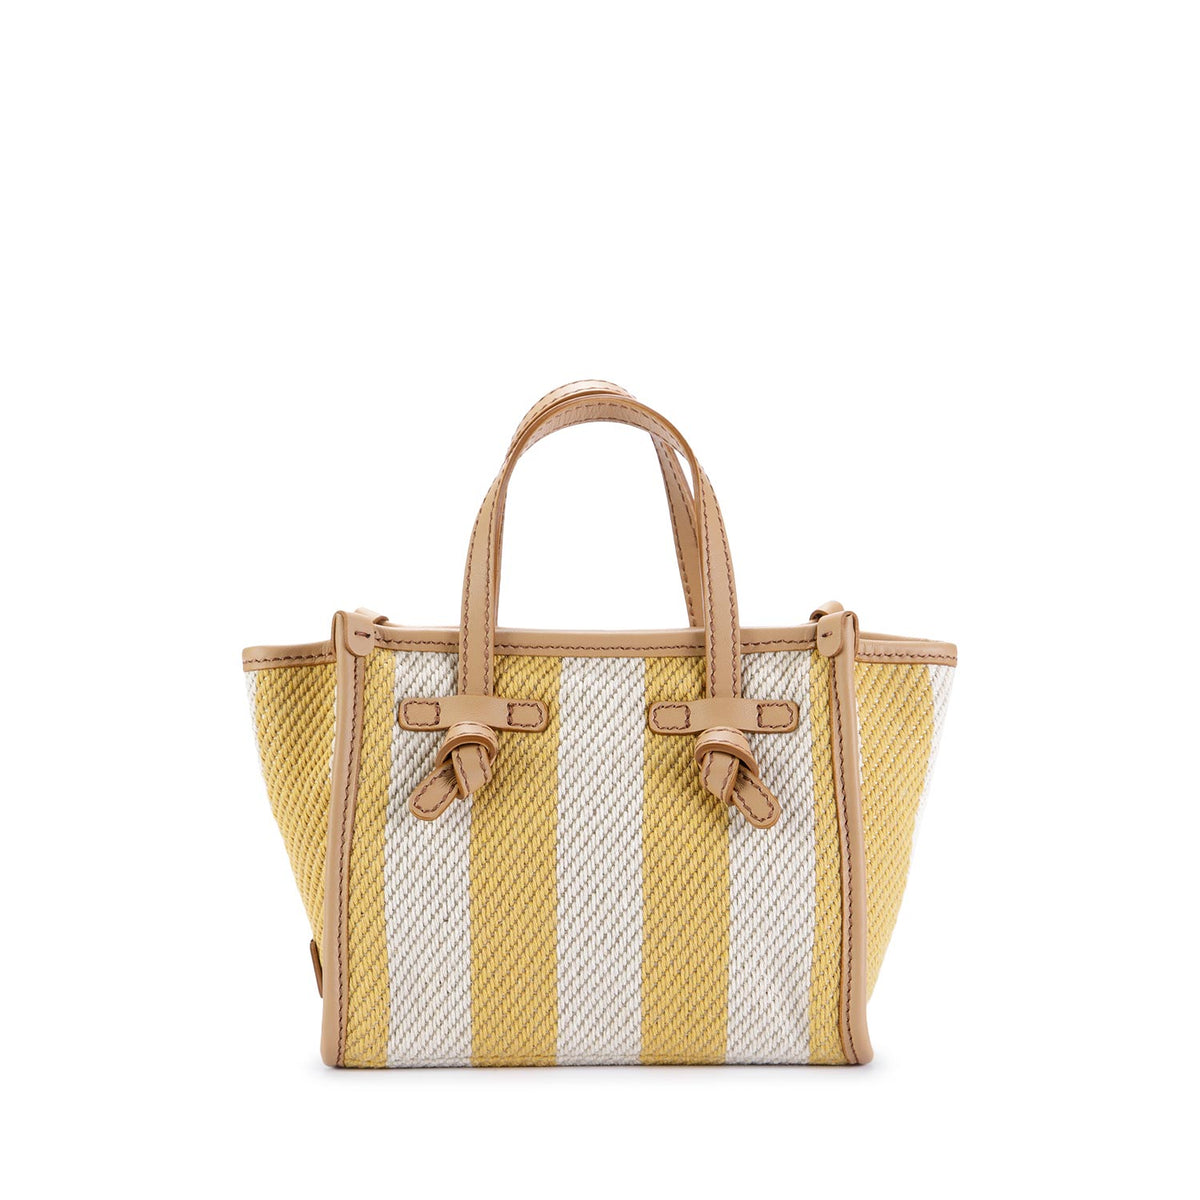 GIANNI CHIARINI | Handbag marcella b.i.b. yellow beige | MODEMOUR ♥